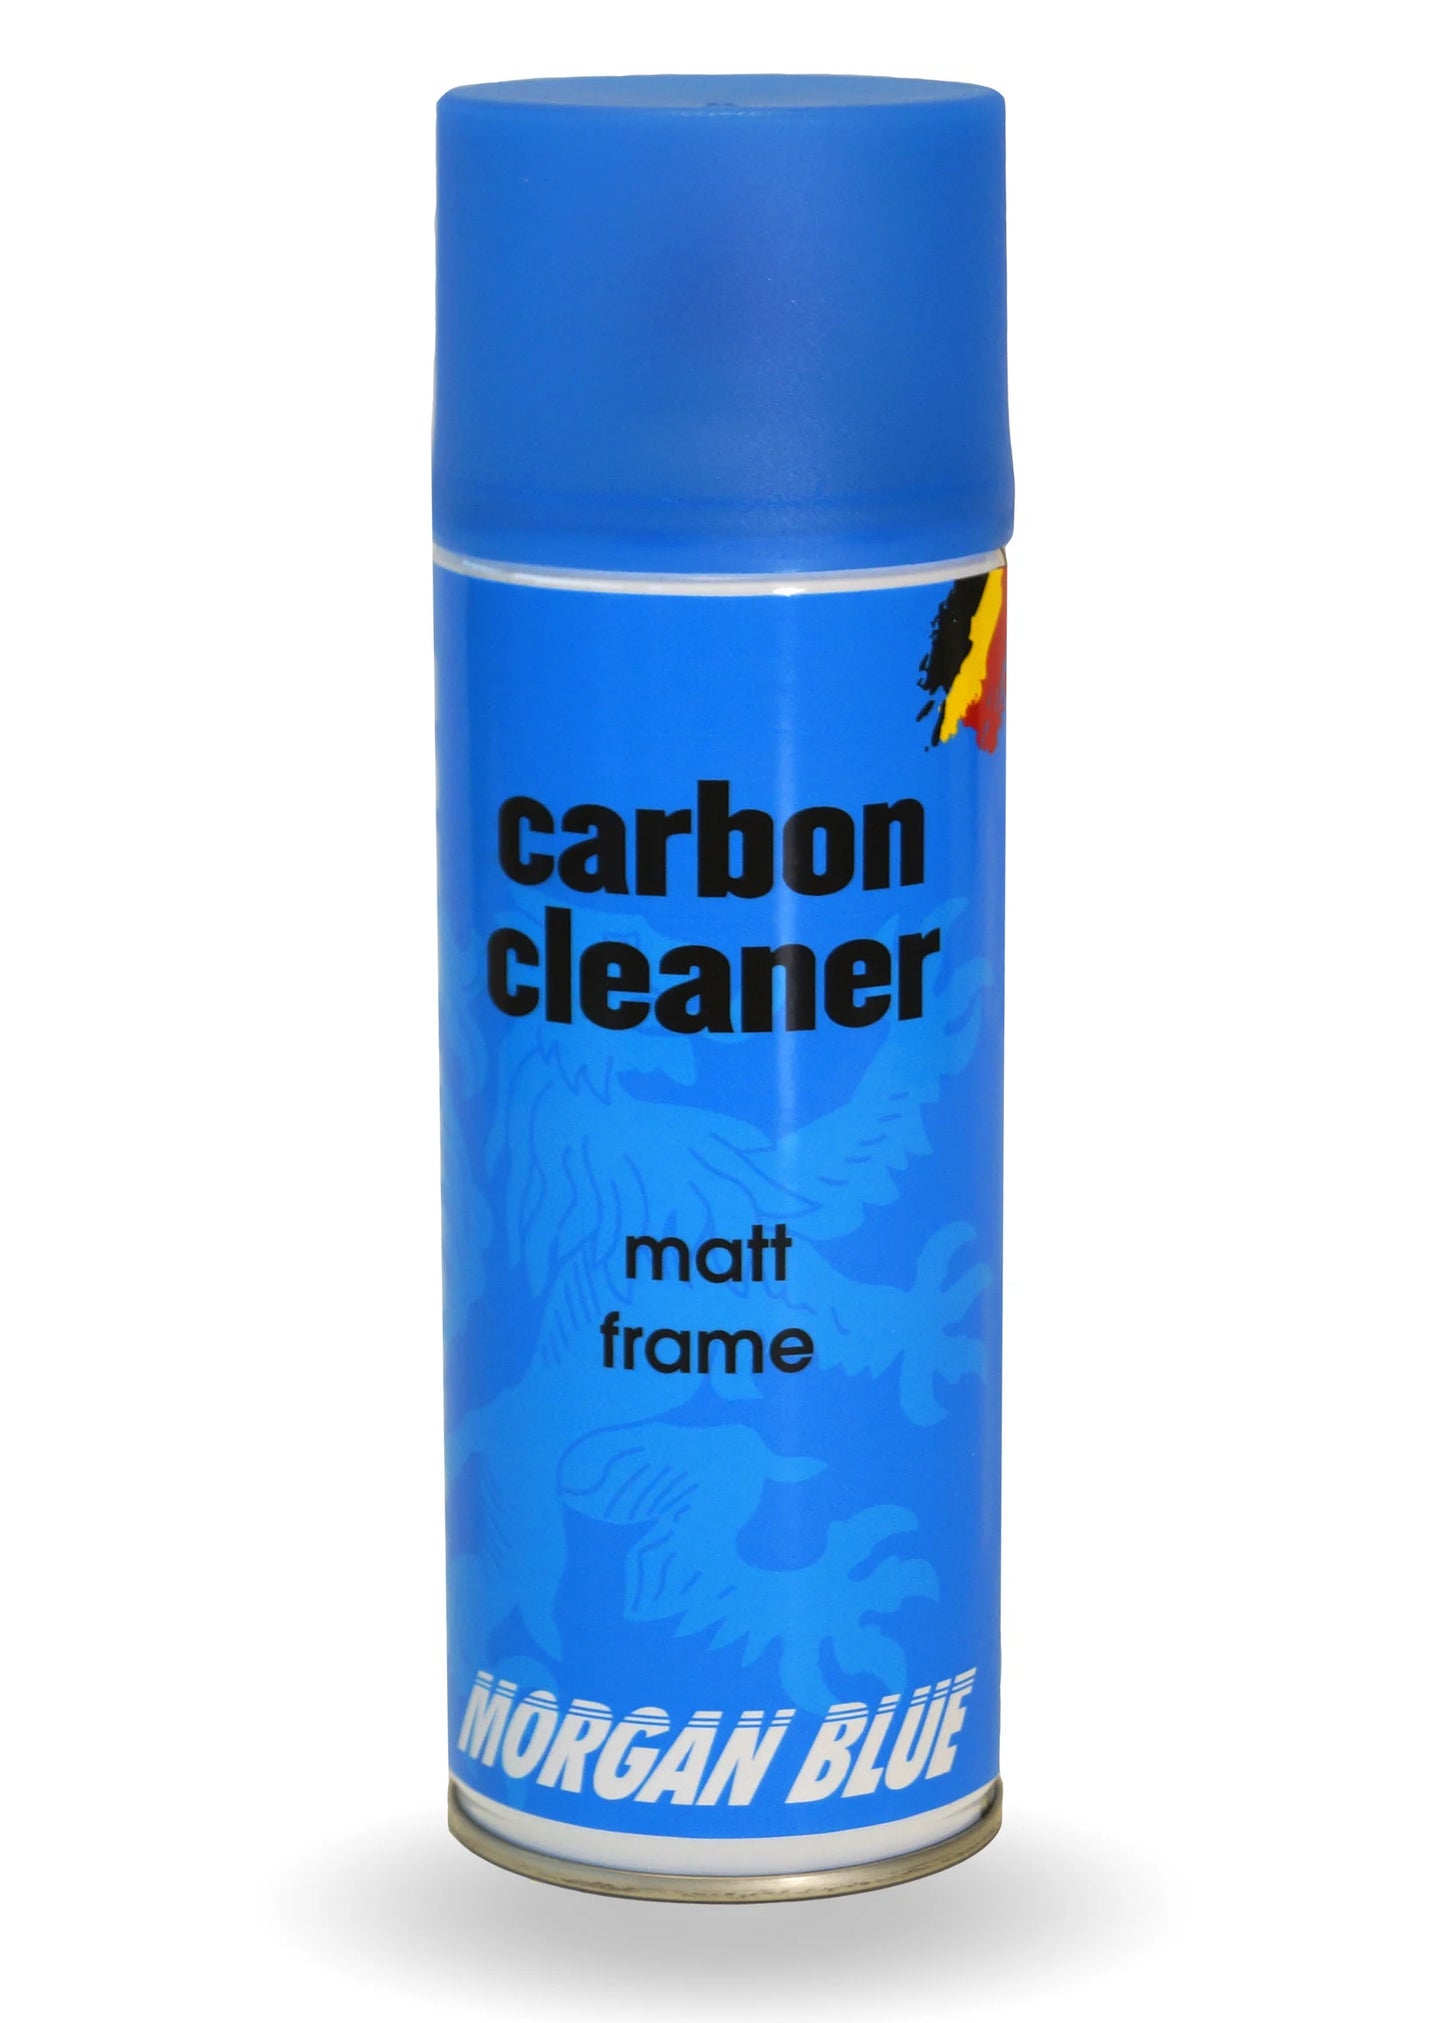 Morgan Blue Carbon Cleaner Matt Frame